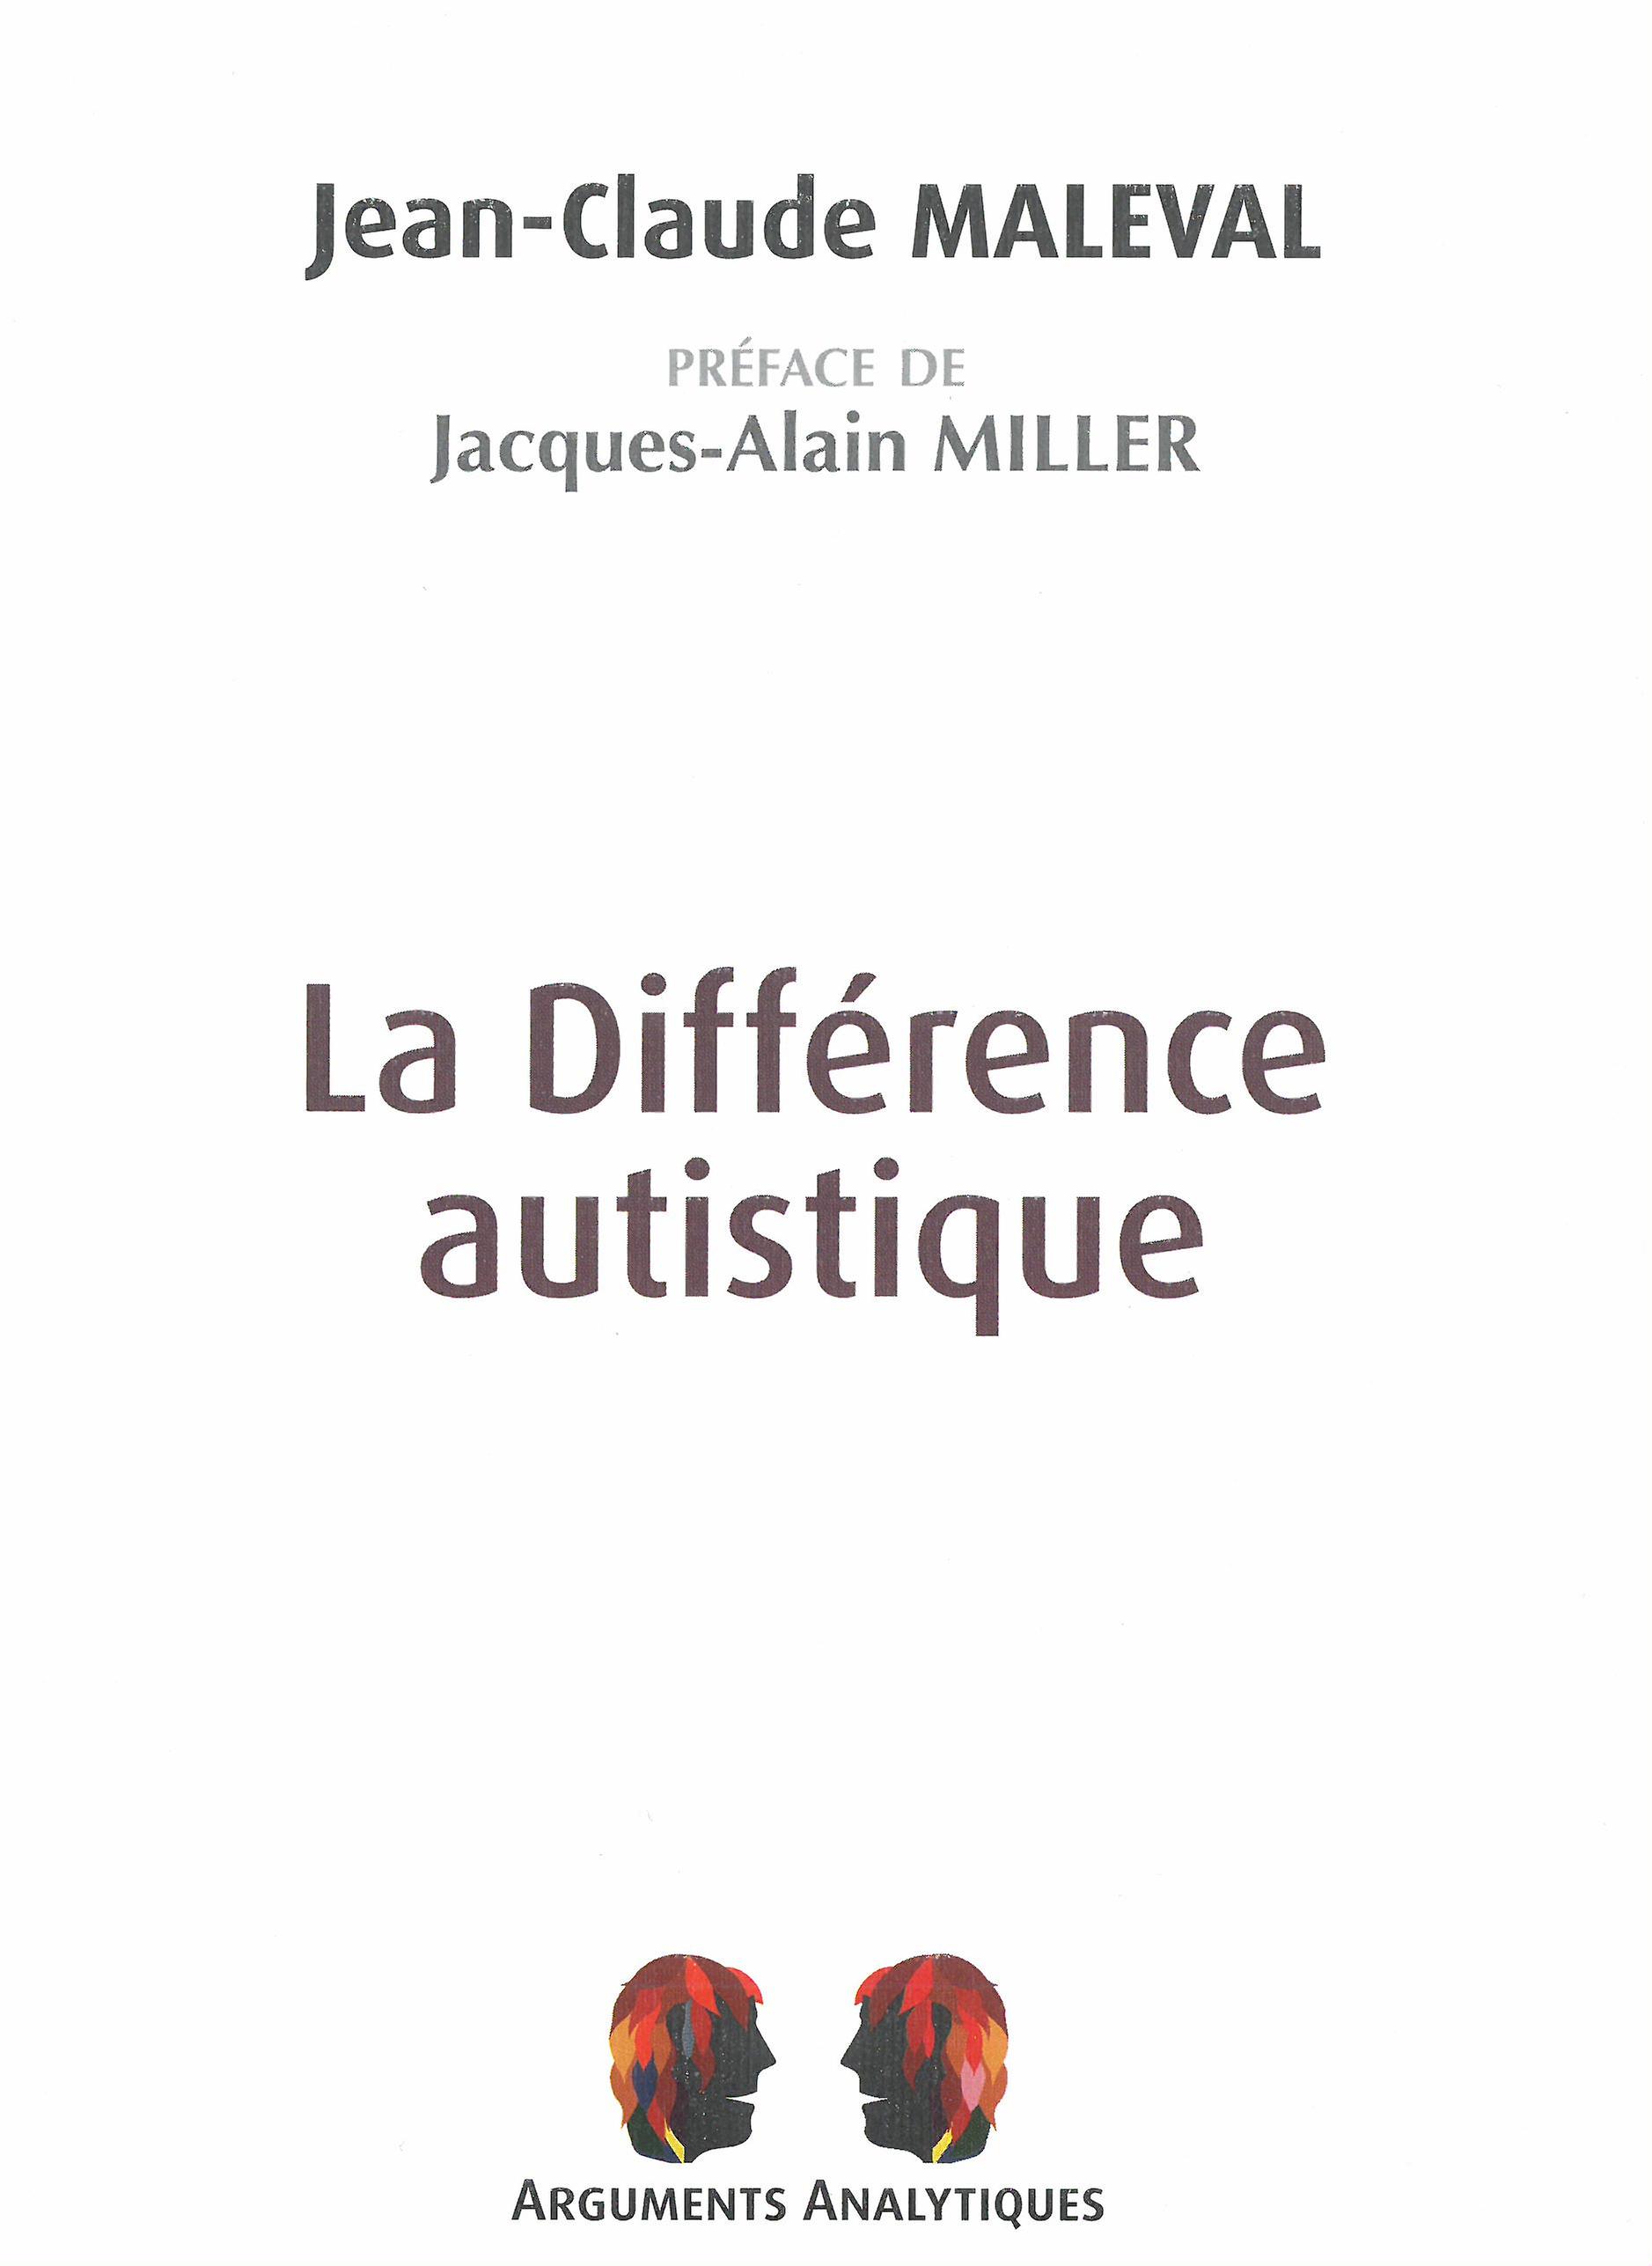 Jean Claude Maleval-La différence autistique.jpg